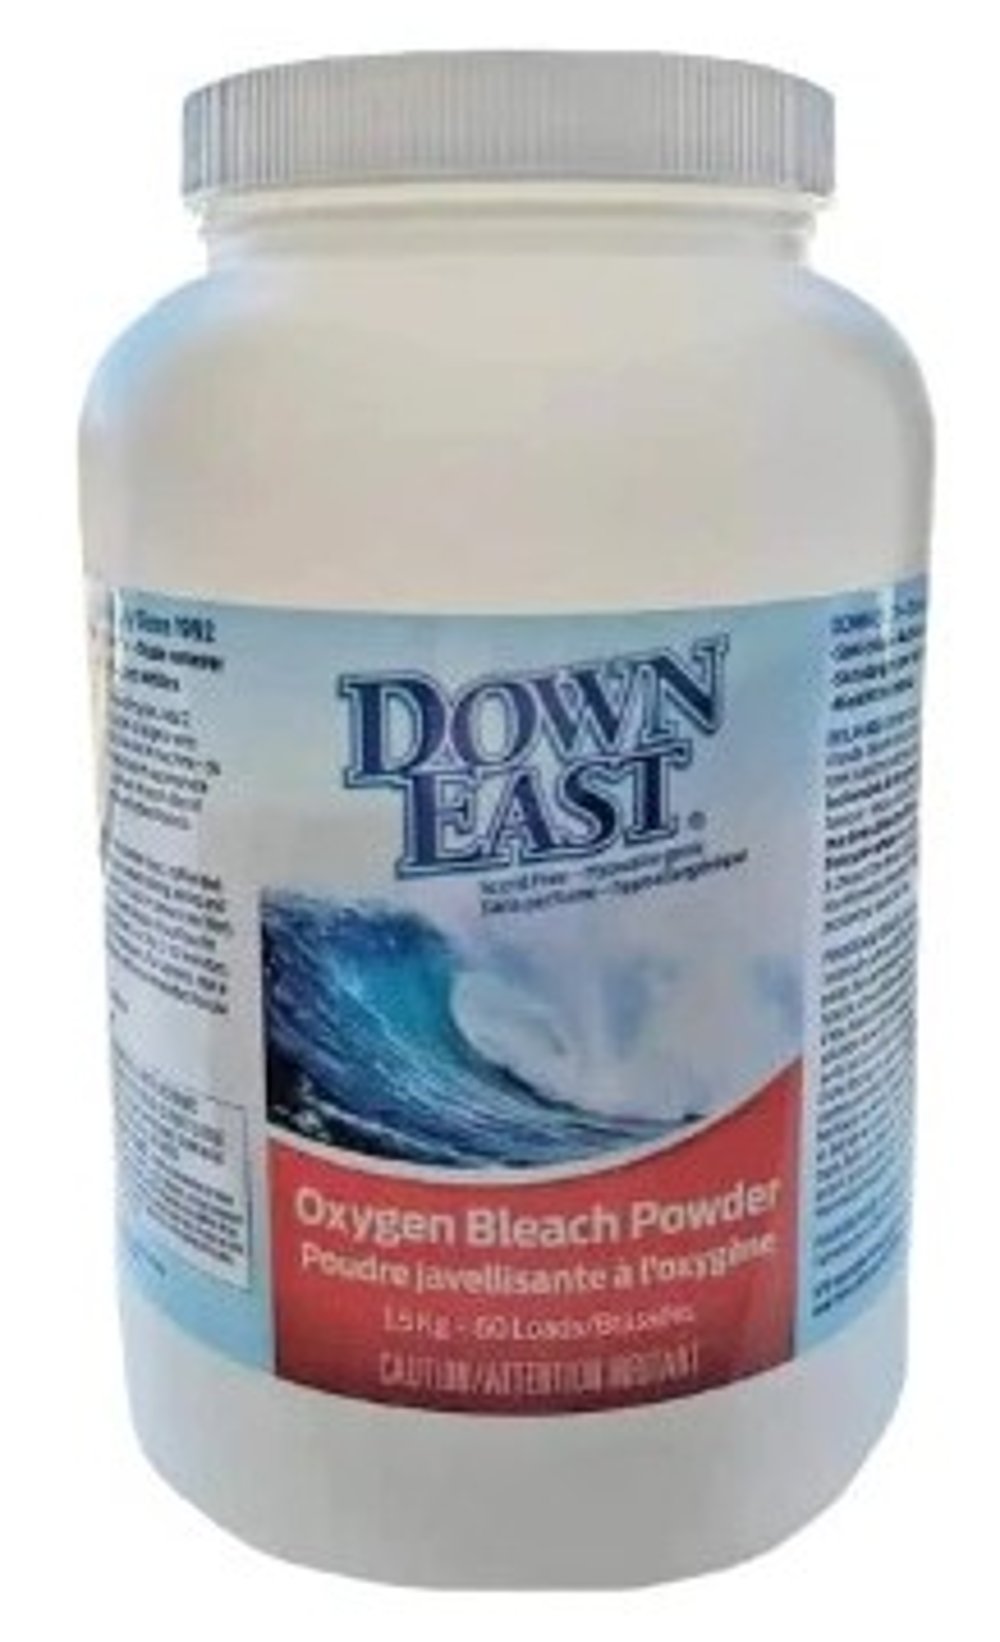 Oxygen Bleach Powder - Downeastclean